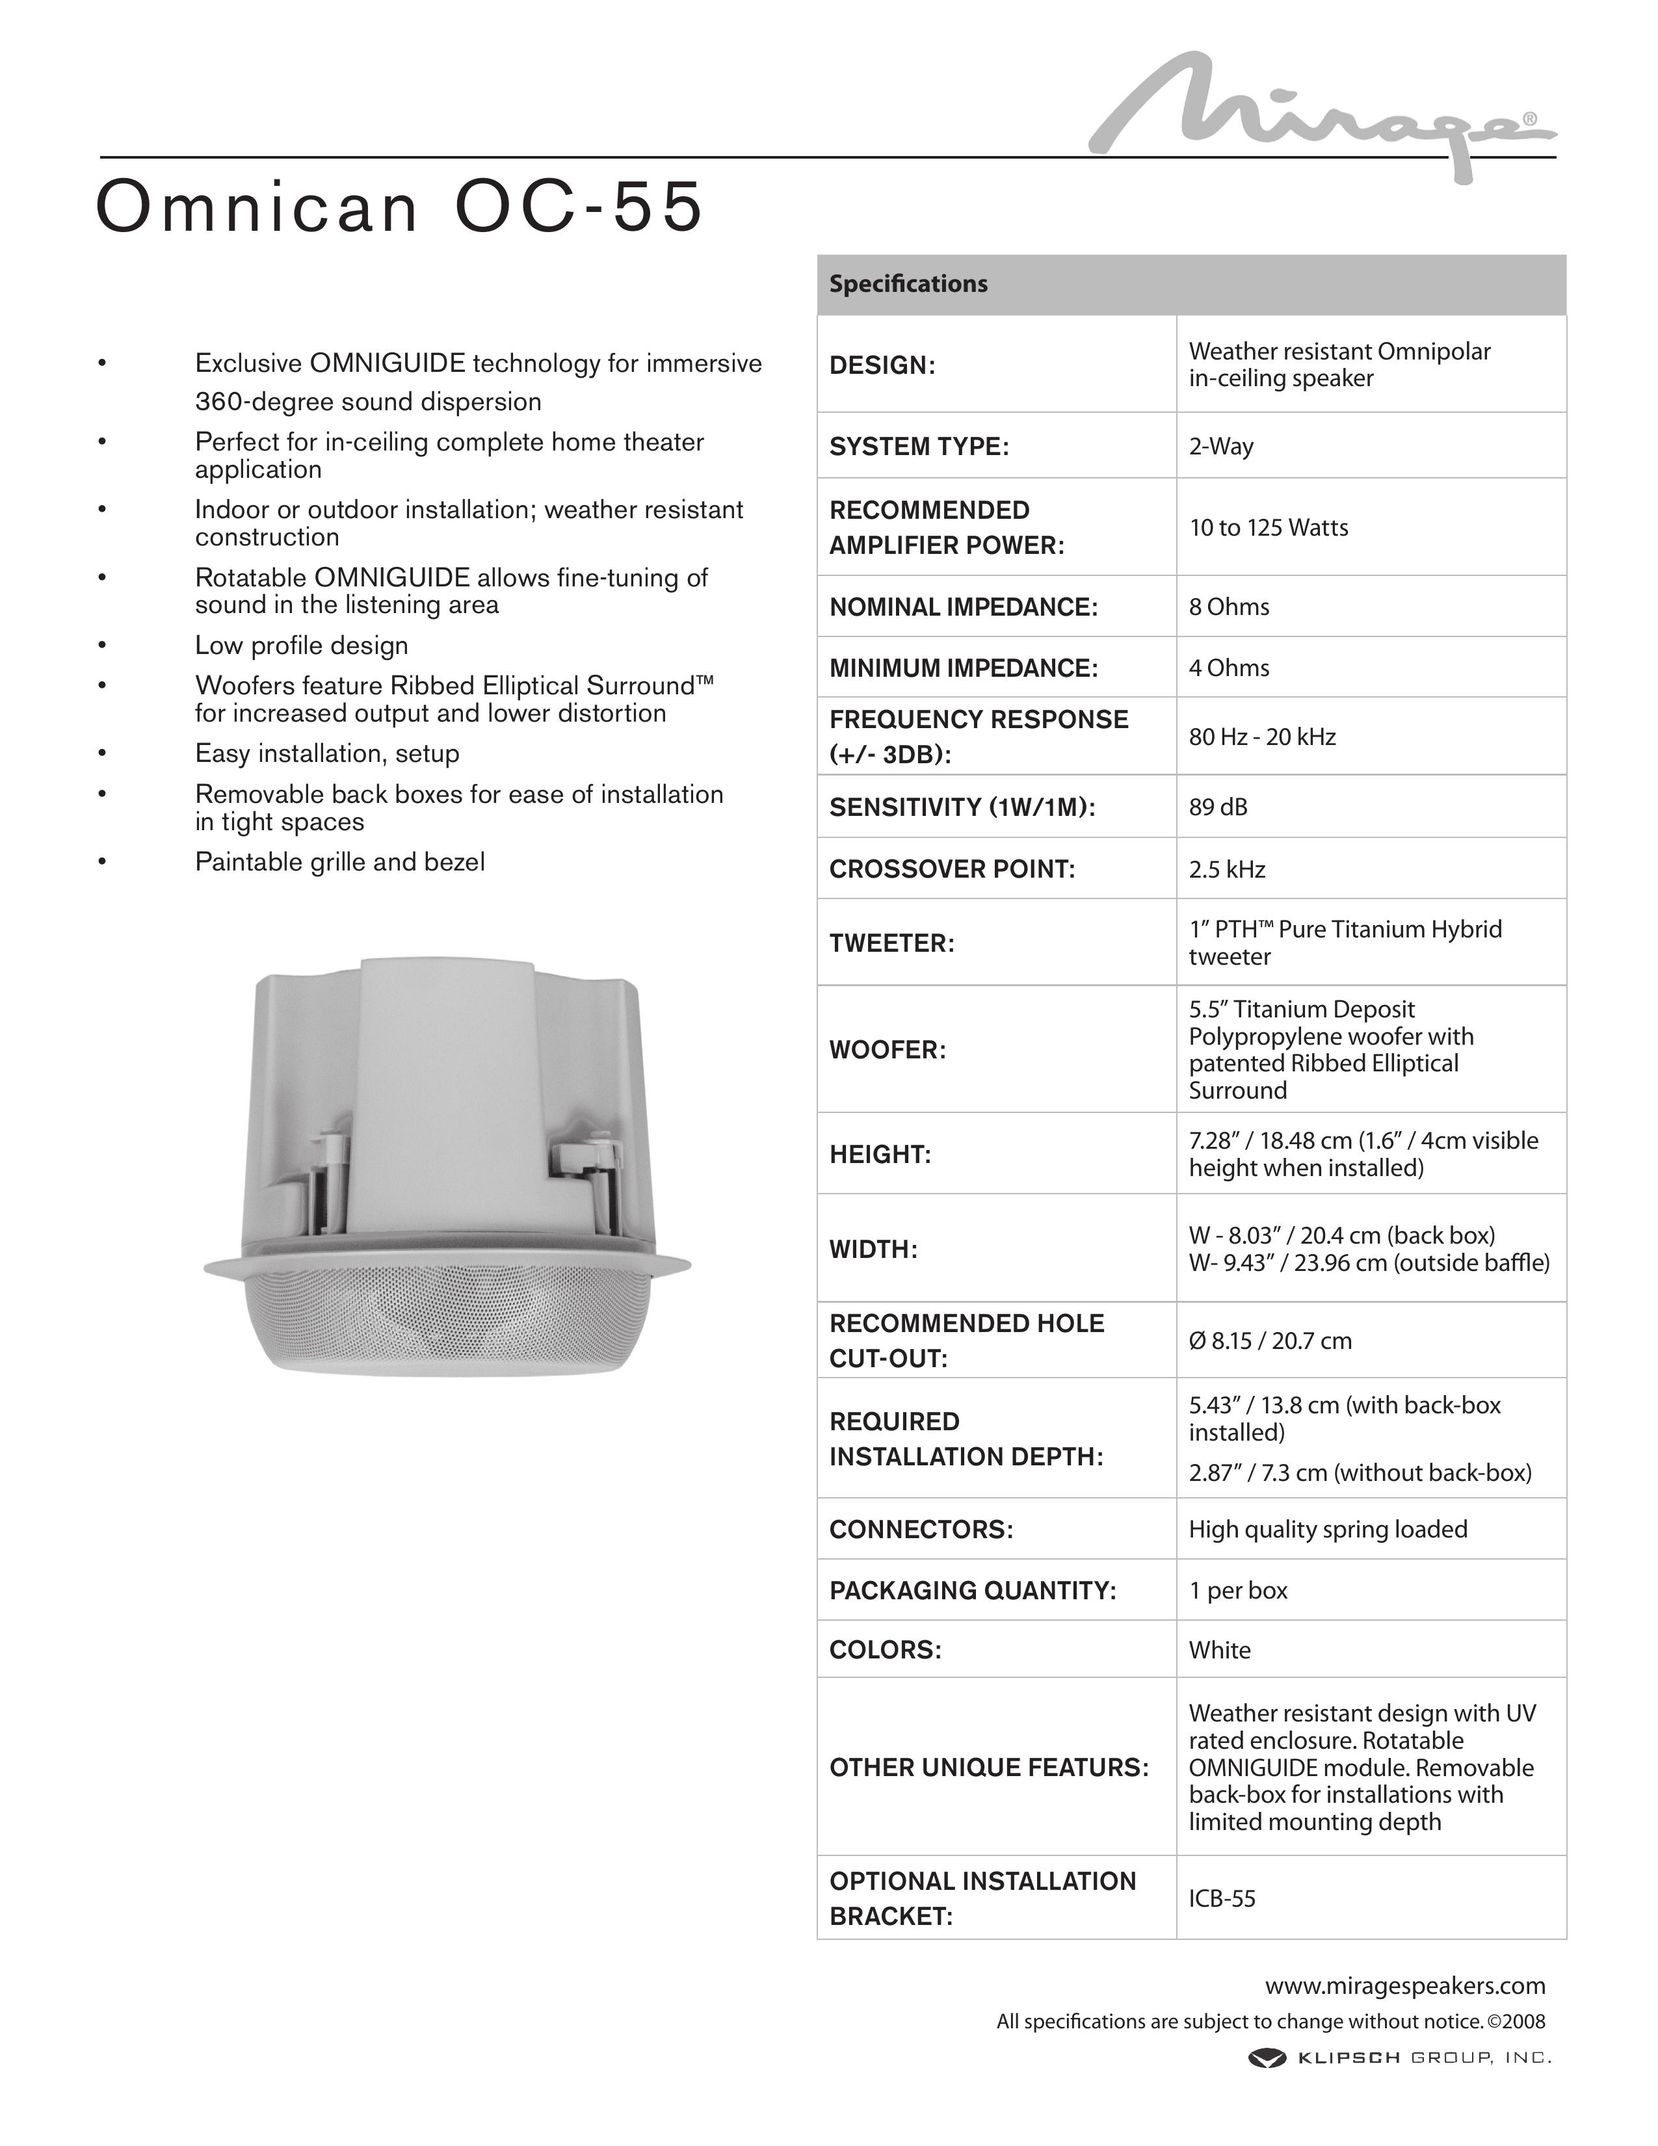 Mirage Loudspeakers OC-55 Speaker User Manual